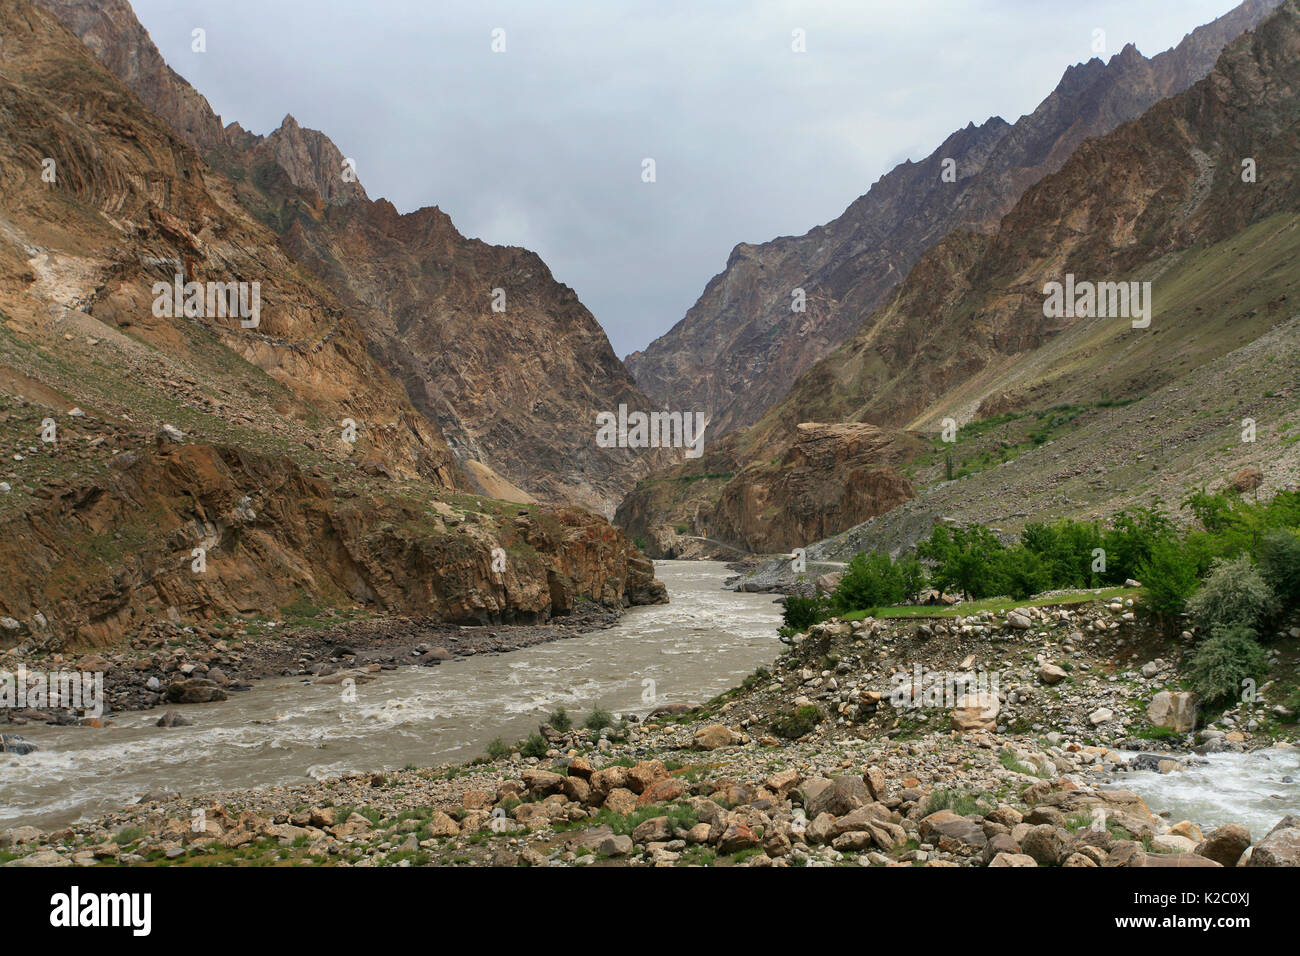 Pyandzh River Gorge lungo il confine tra il Tagikistan (destra) - Afghanistan (sinistra) Badakshan Regione, Pamir Mountains, dell'Asia centrale. Giugno. Foto Stock